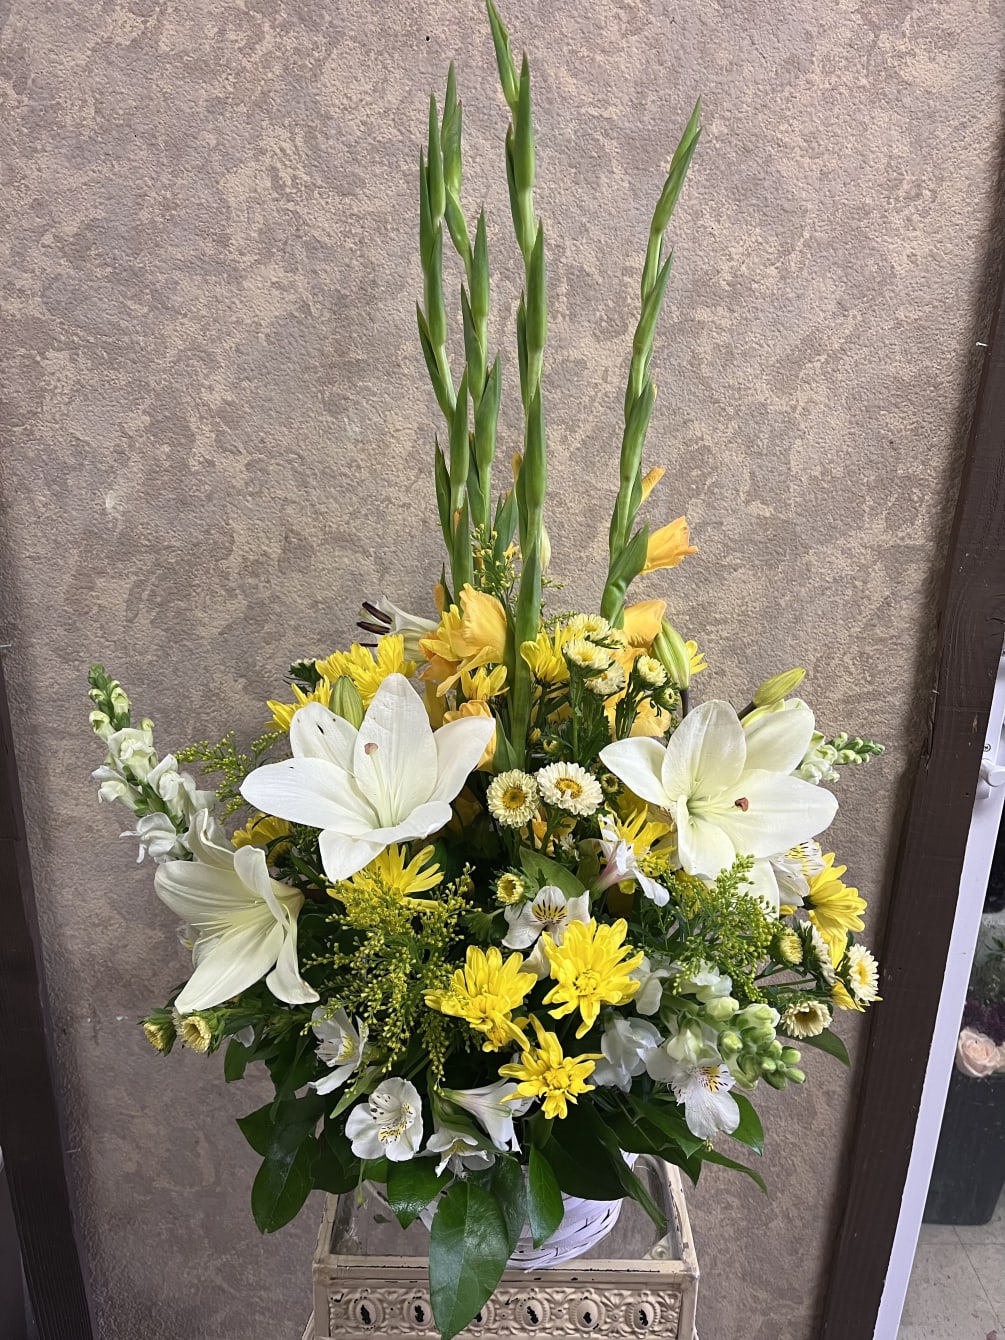 Stunning Gladiolas, lilies, larkspur, roses, alstroemerias, chrysanthemums, in a white basket vase.